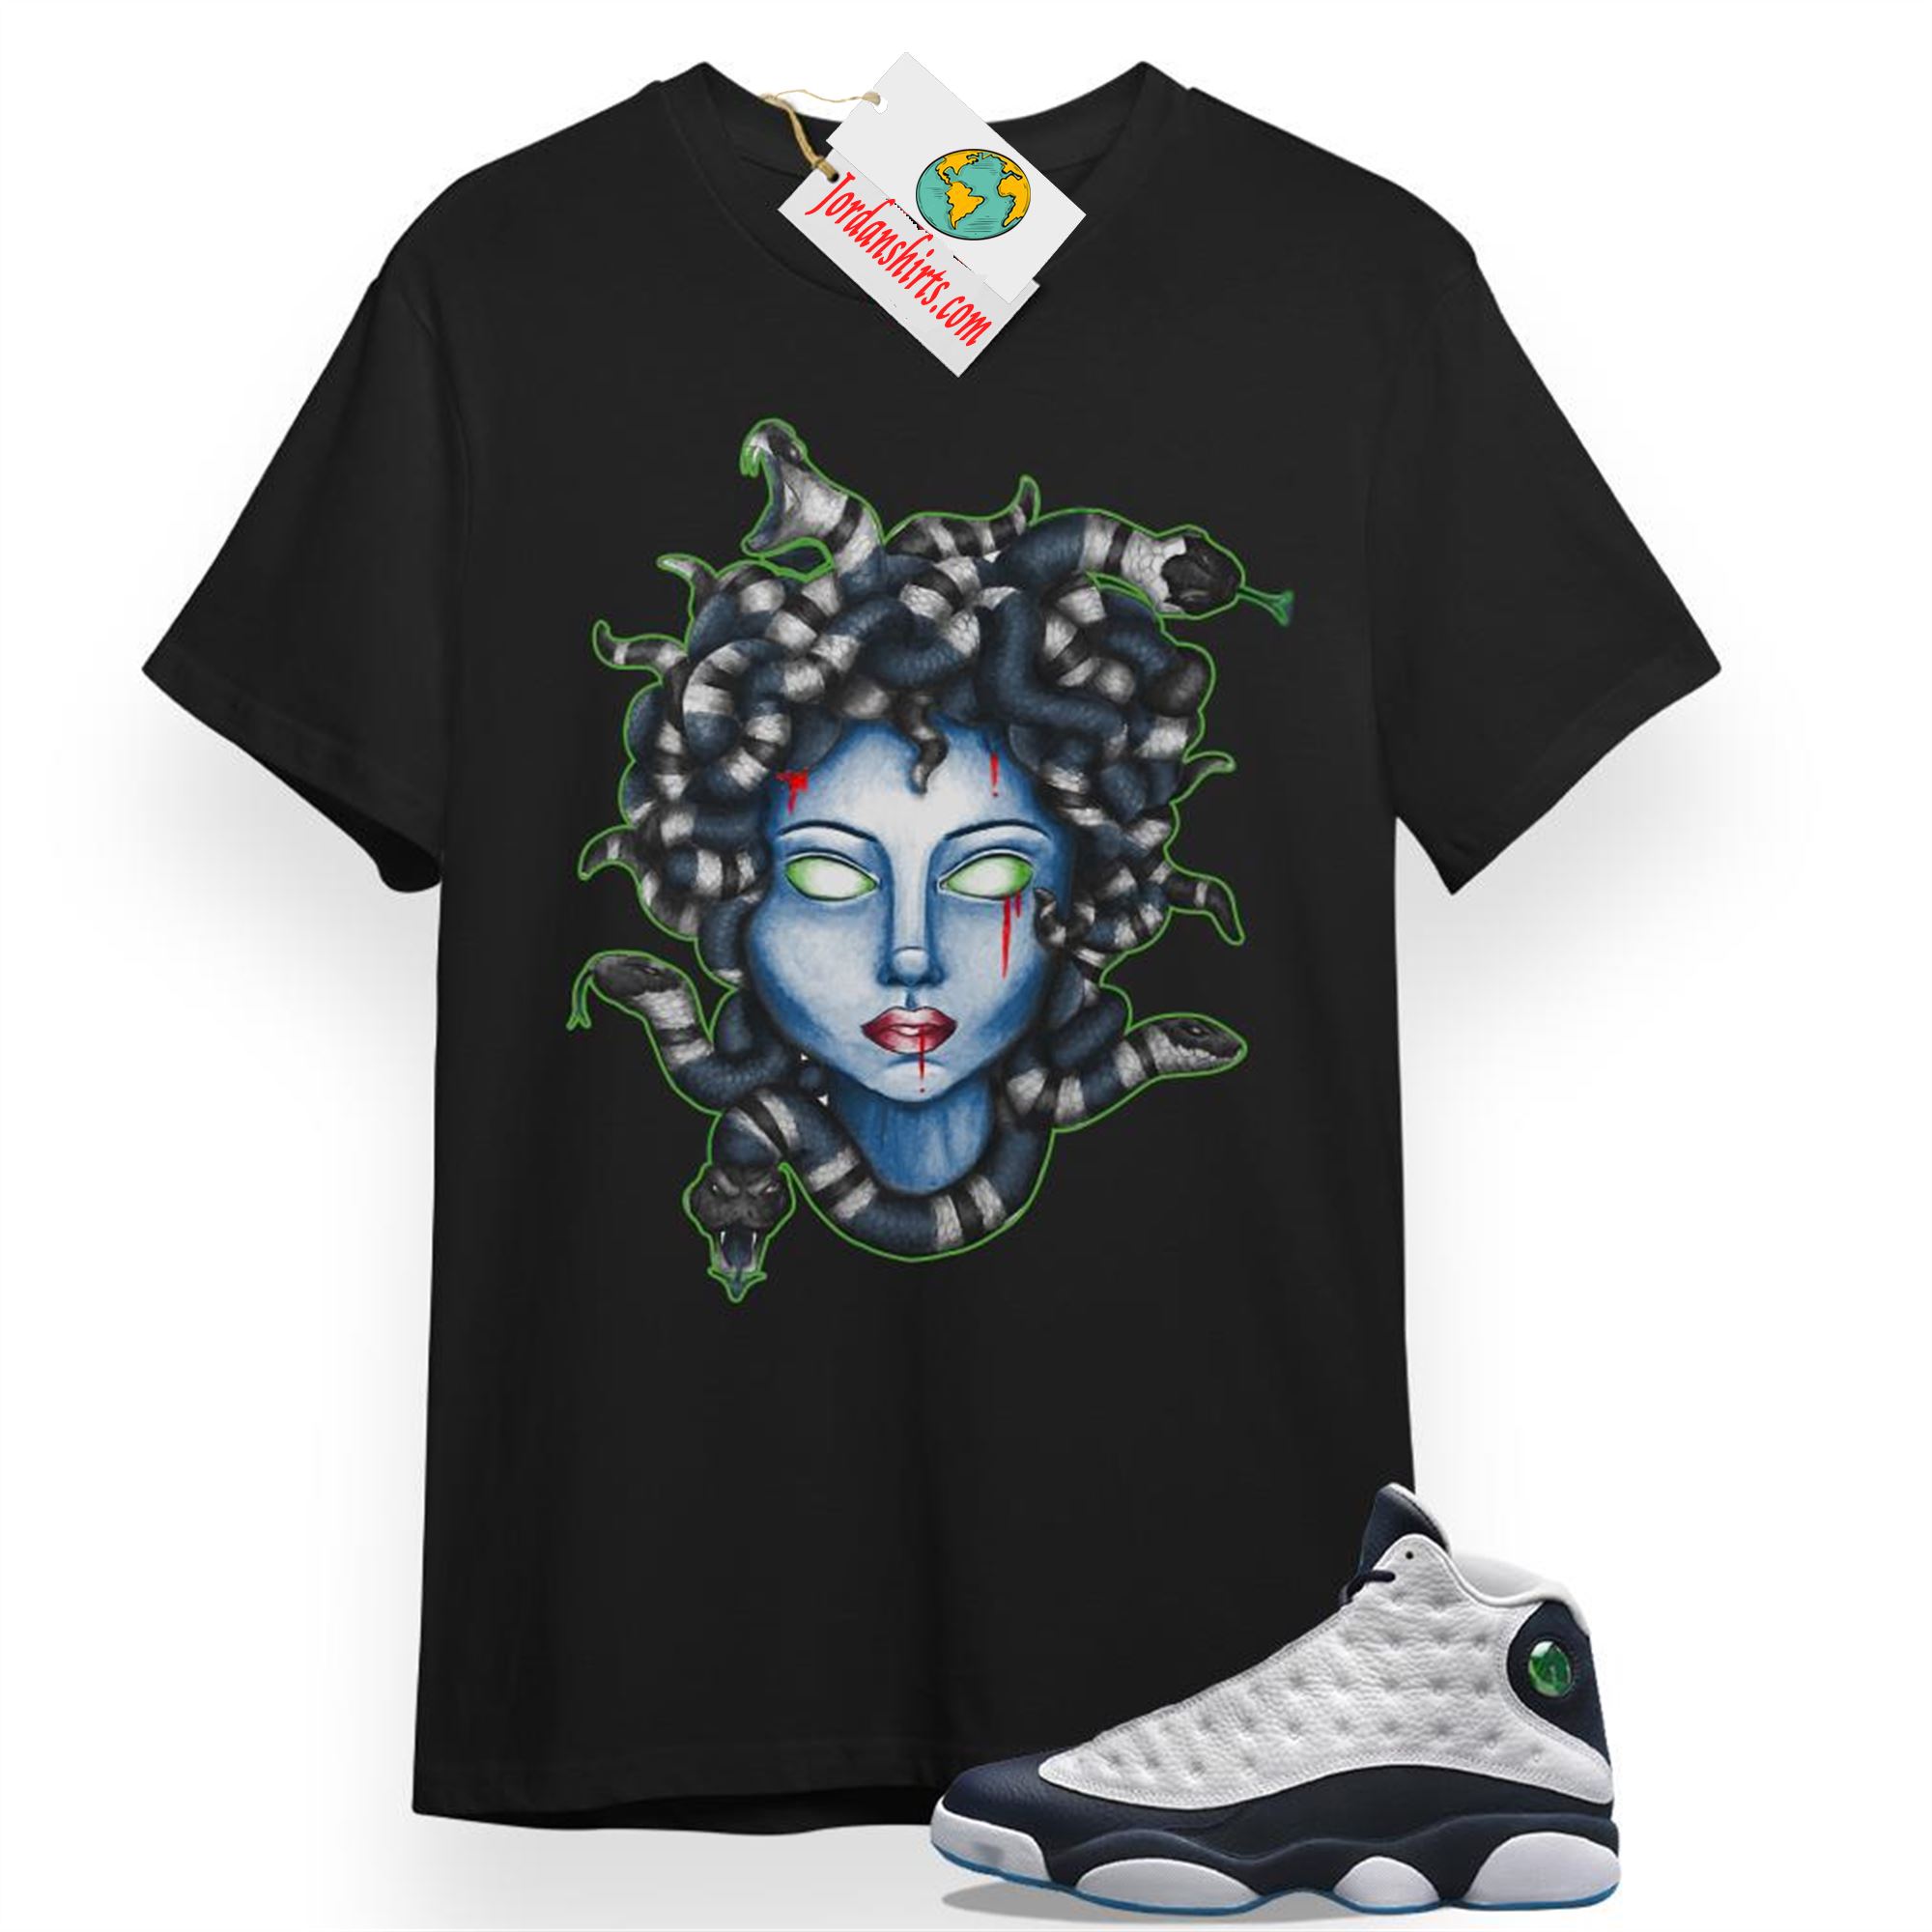 Jordan 13 Shirt, Medusa Snake Black T-shirt Air Jordan 13 Obsidian 13s Full Size Up To 5xl